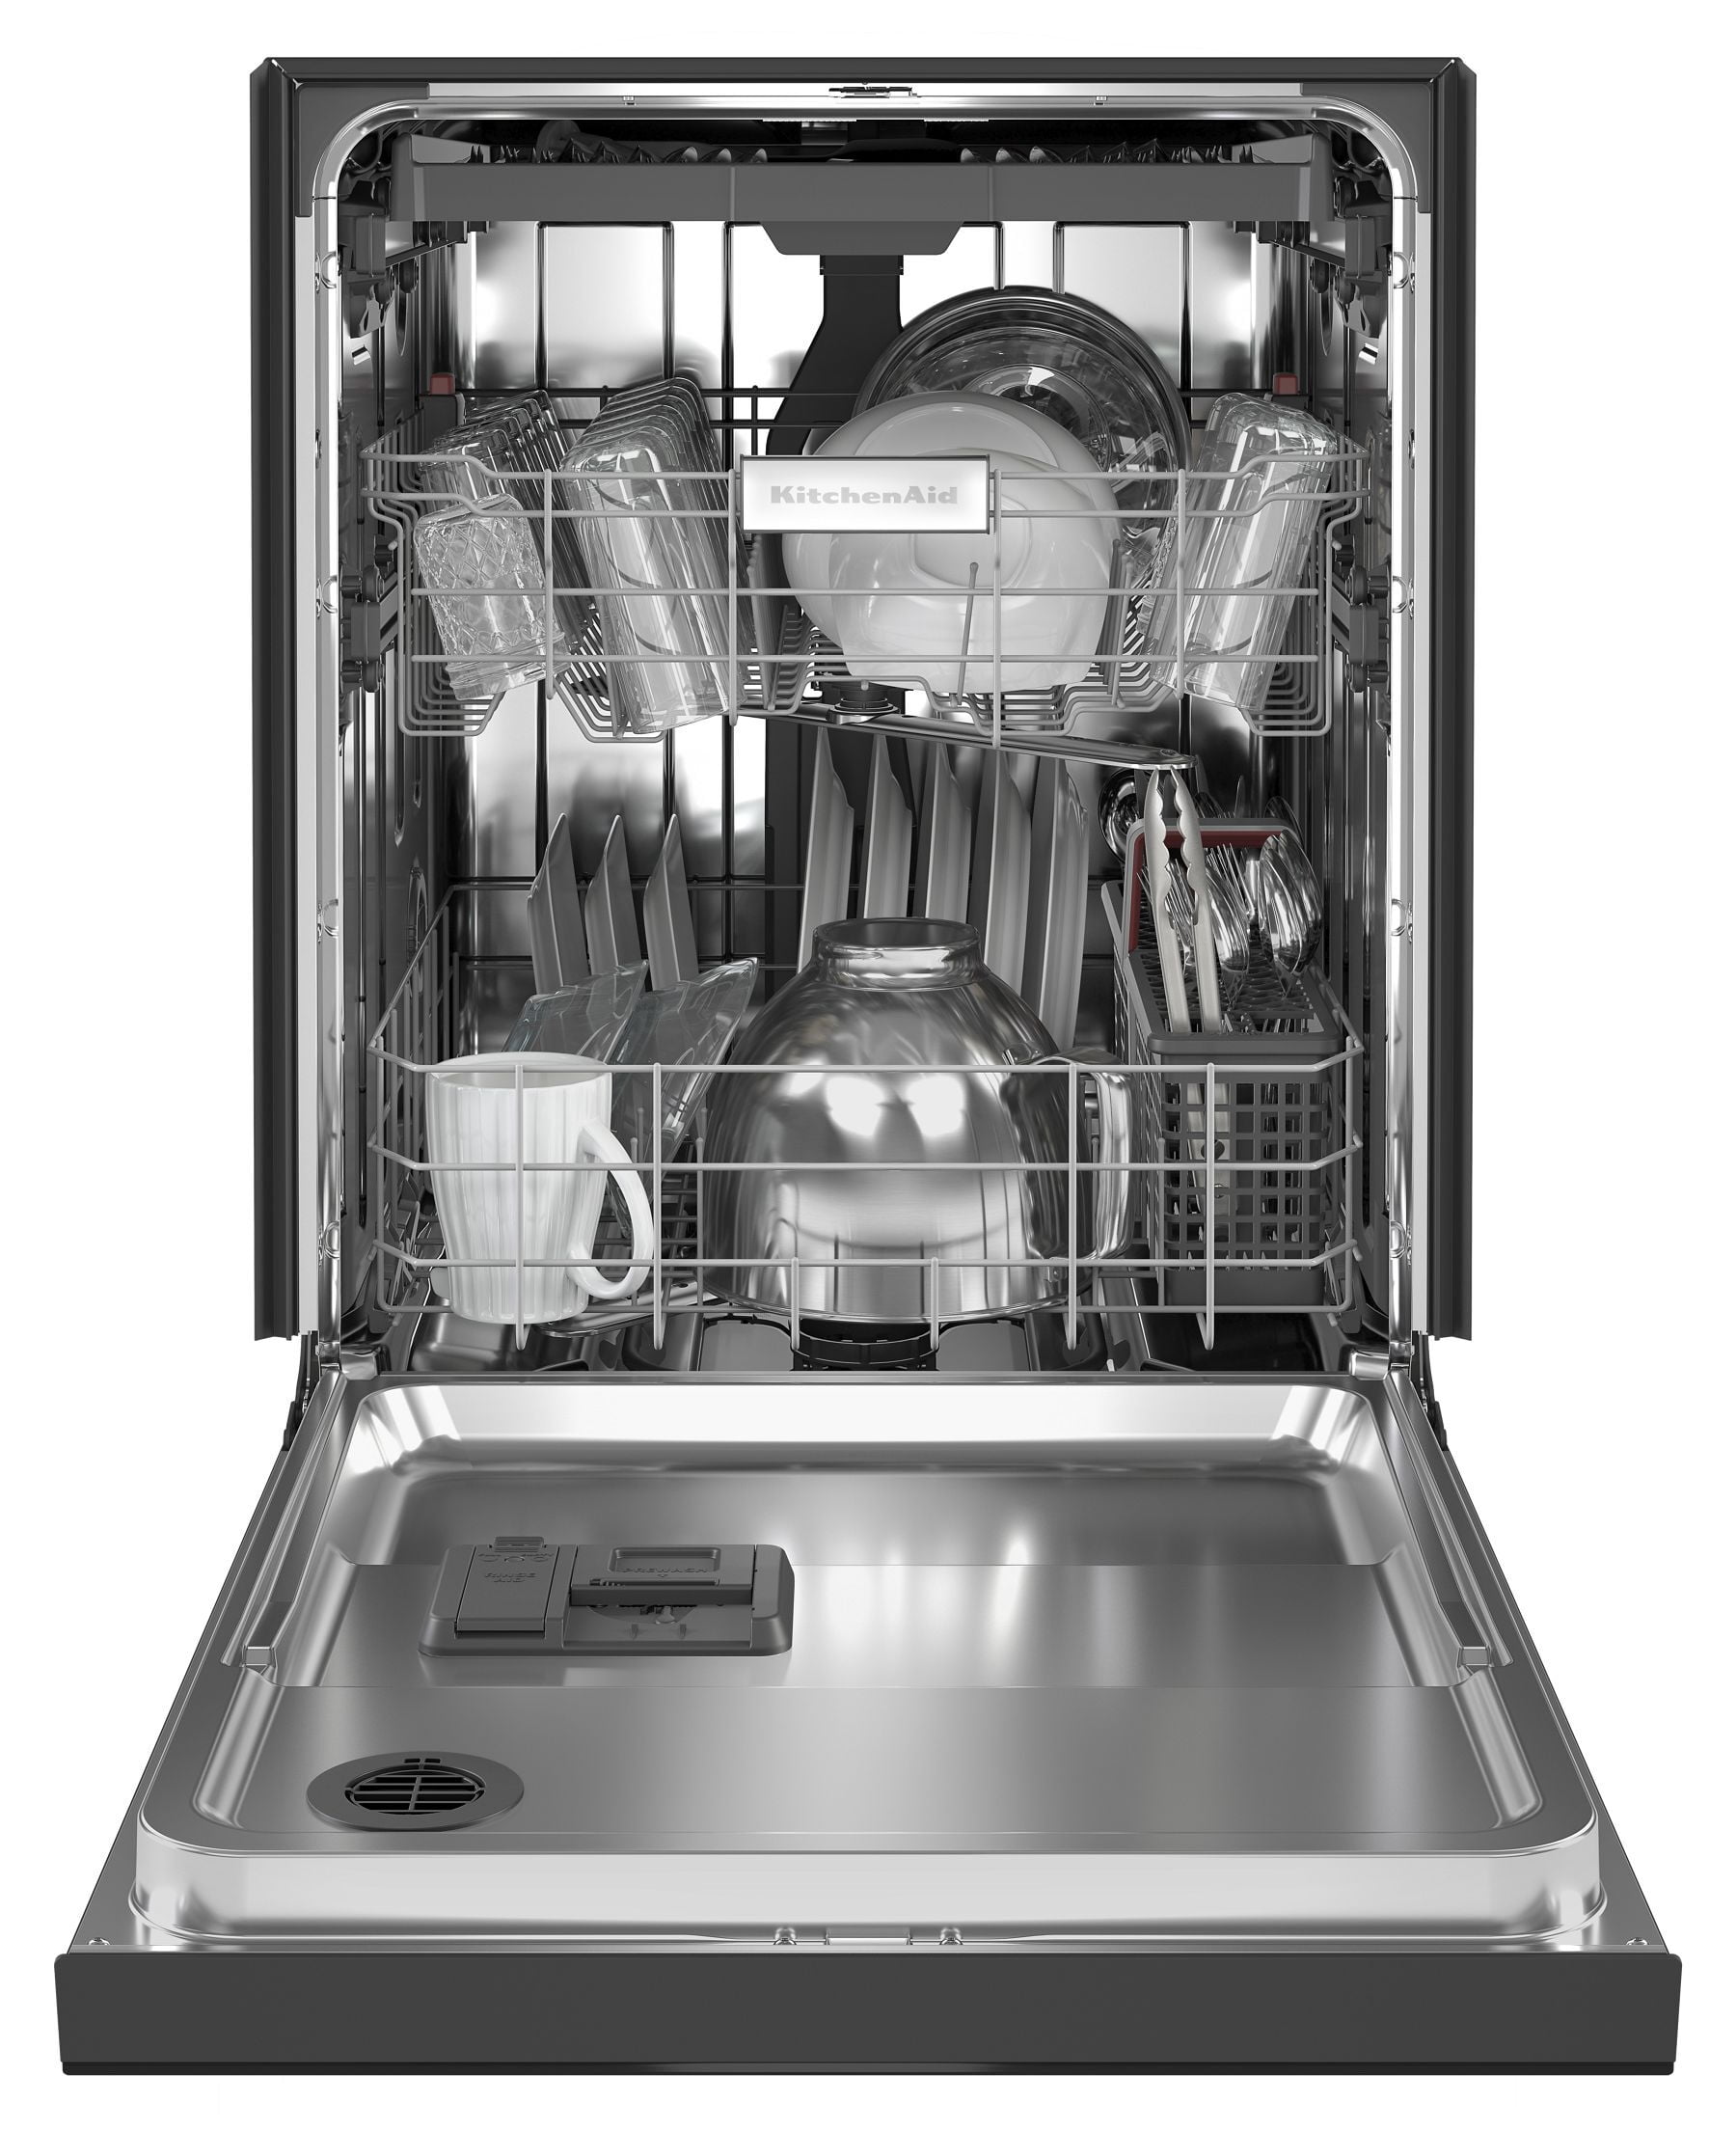 KDFE204KBL by KitchenAid - 39 dBA Dishwasher with Third Level